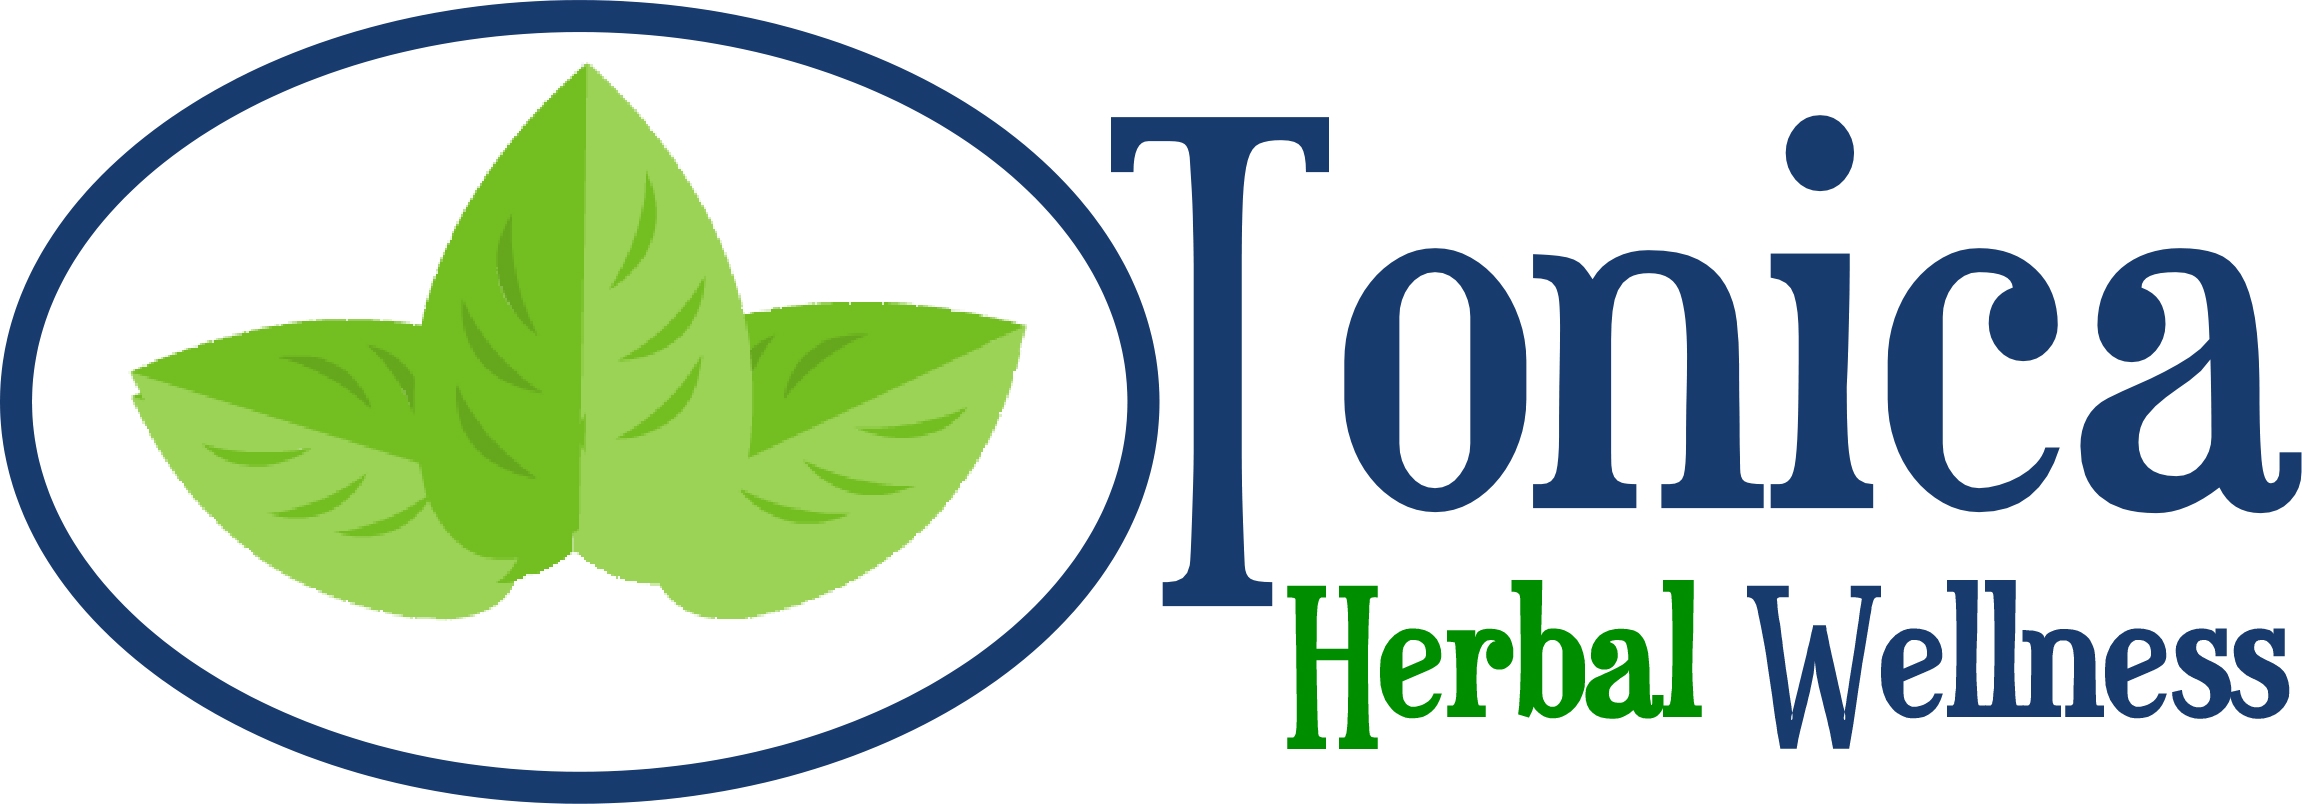 Tonica Herbal Wellness